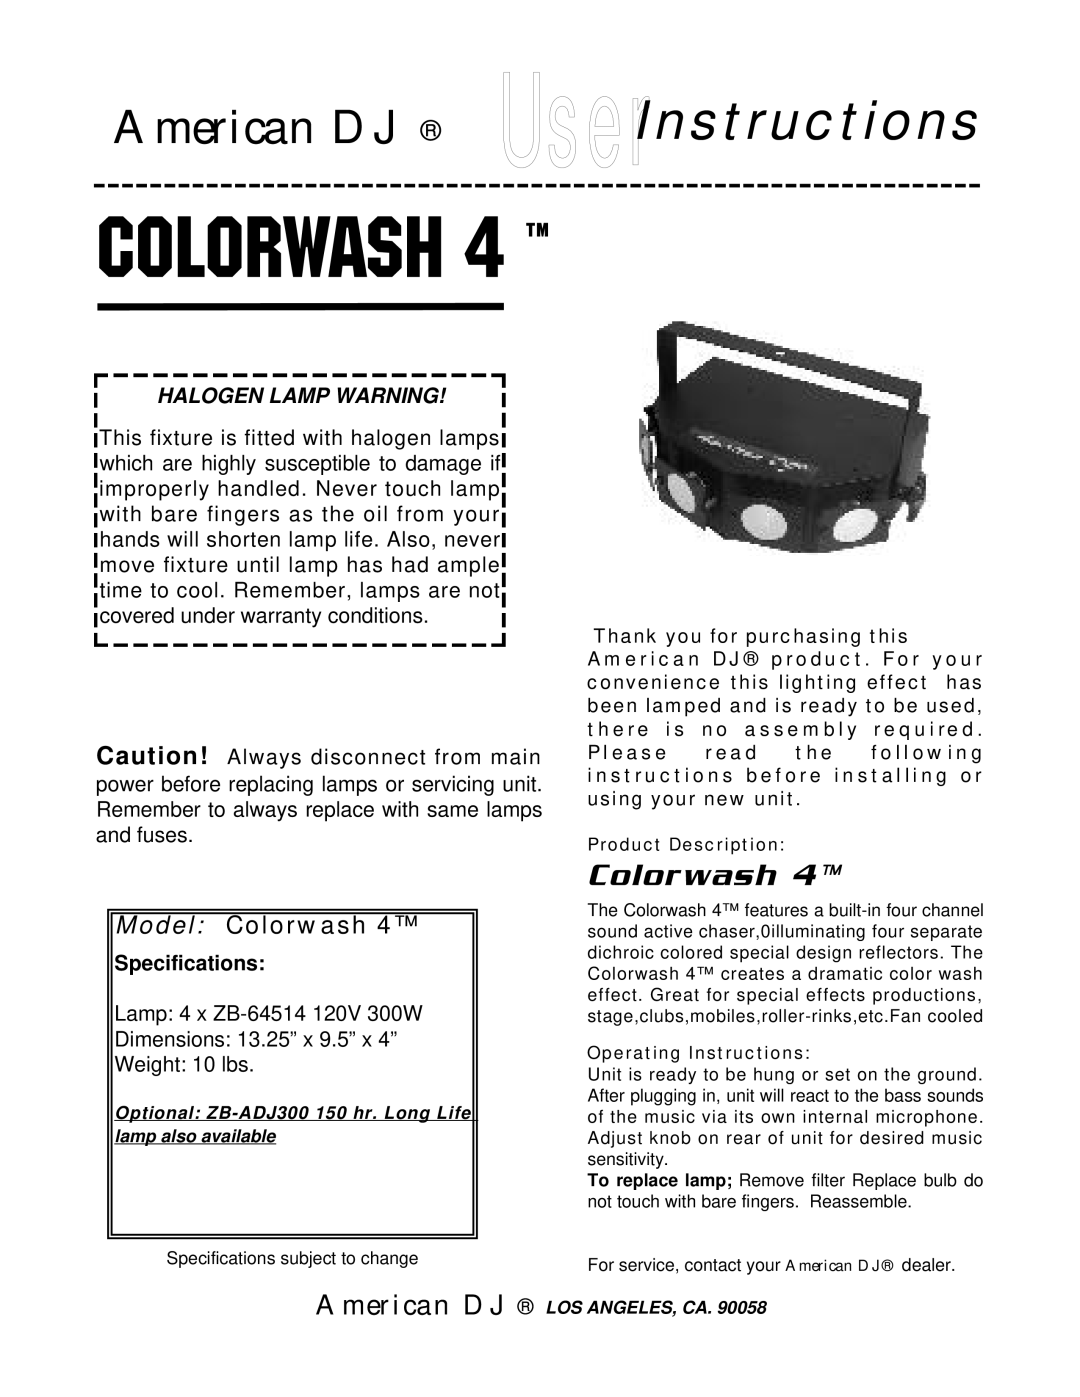 American DJ Colorwash 4 warranty American DJ UserInstructions, Model Colorwash, Halogen Lamp Warning, Specifications 